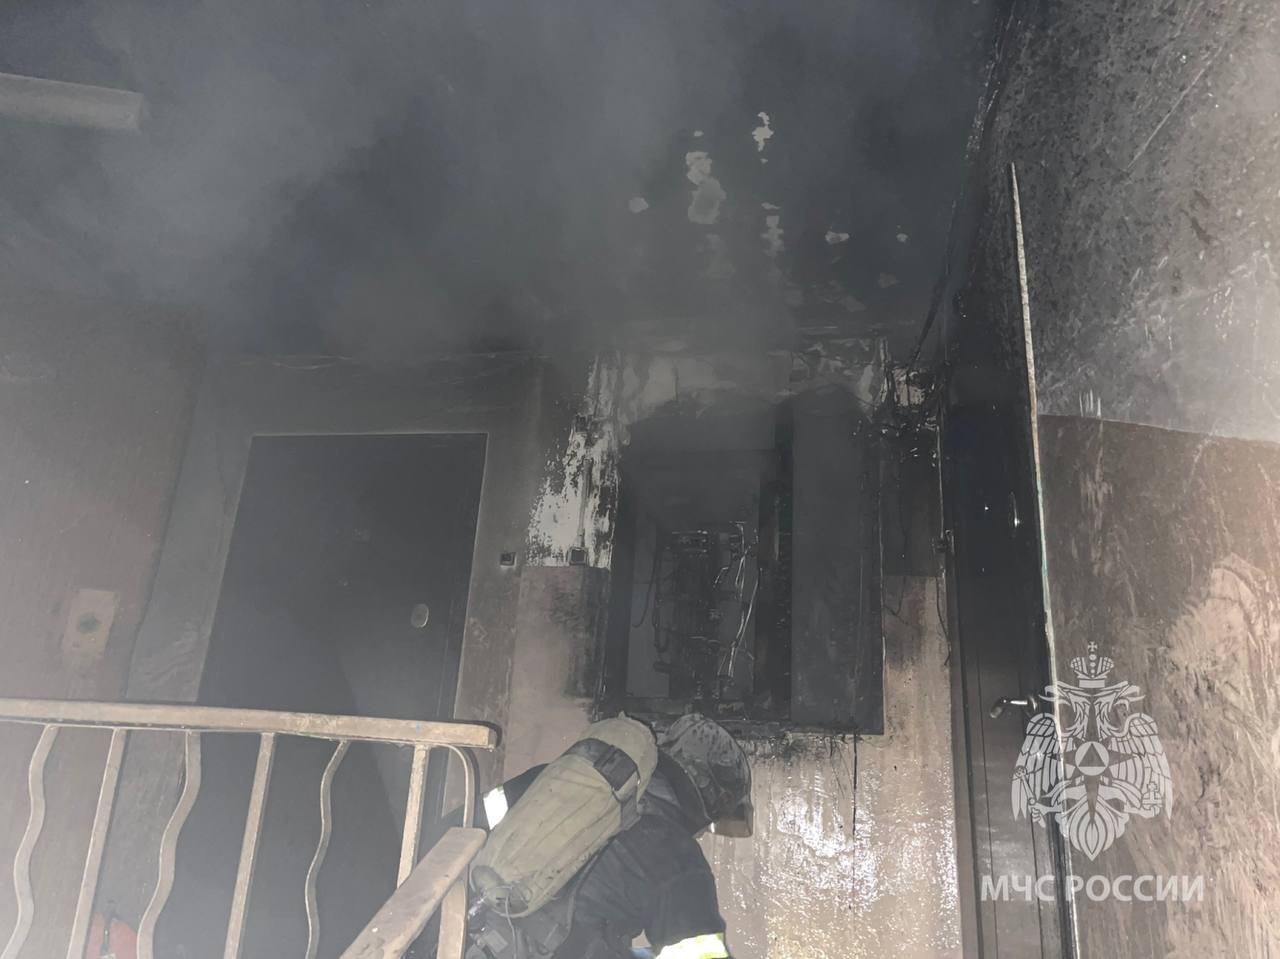 Один человек пострадал при пожаре в многоквартирном доме в Иркутске